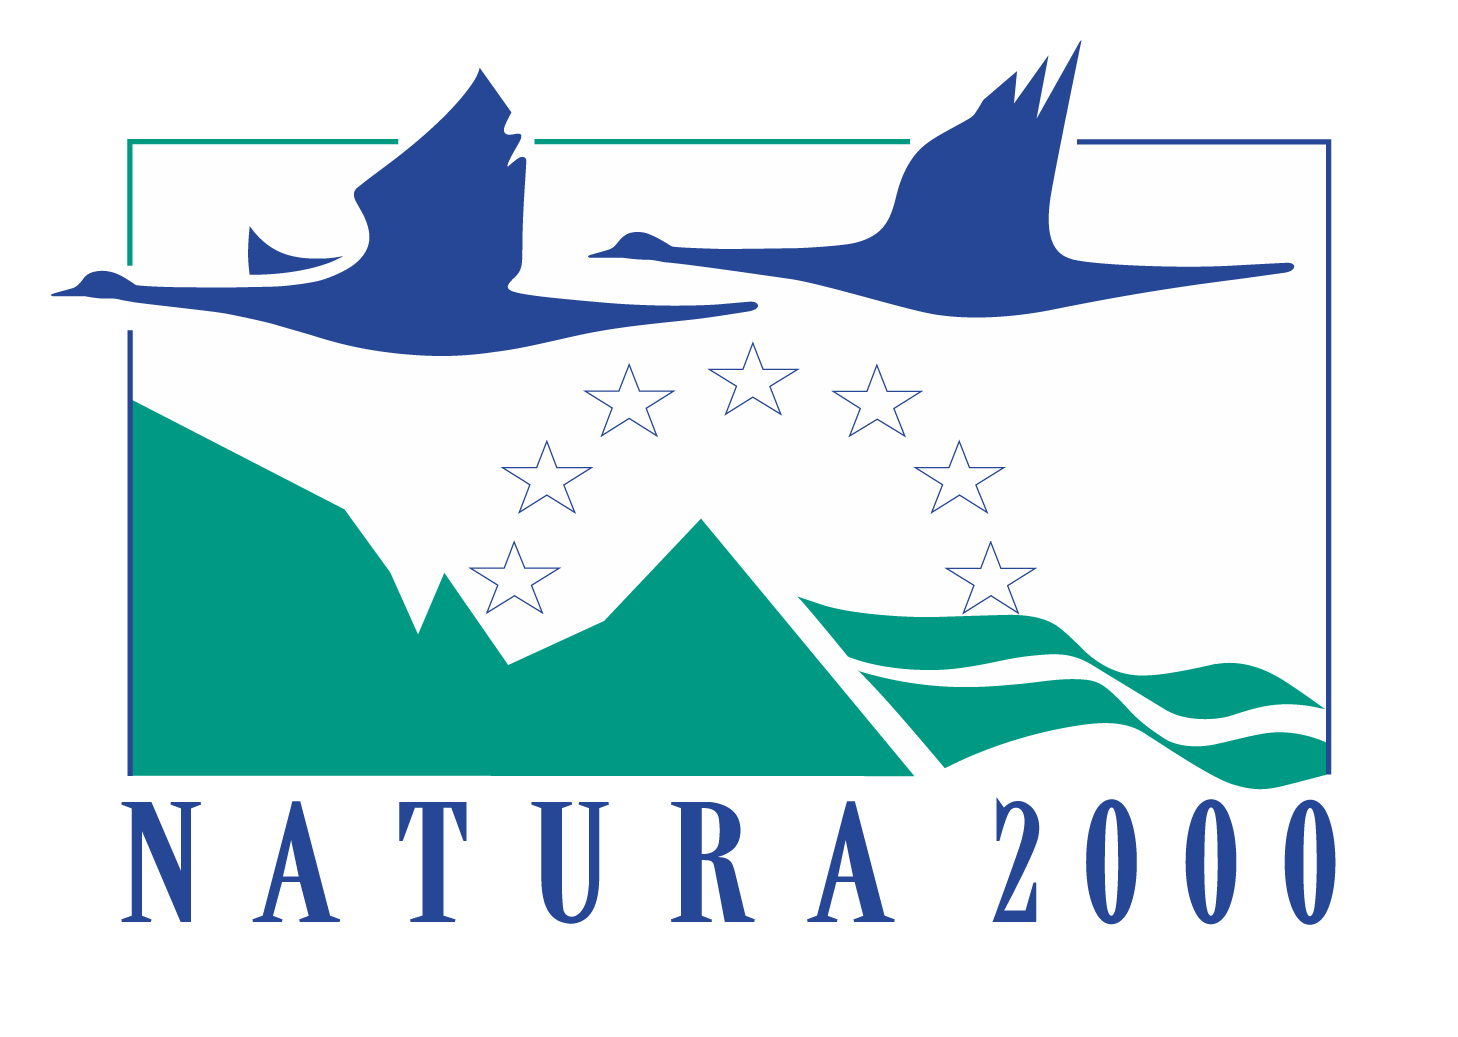 Logo natura2000